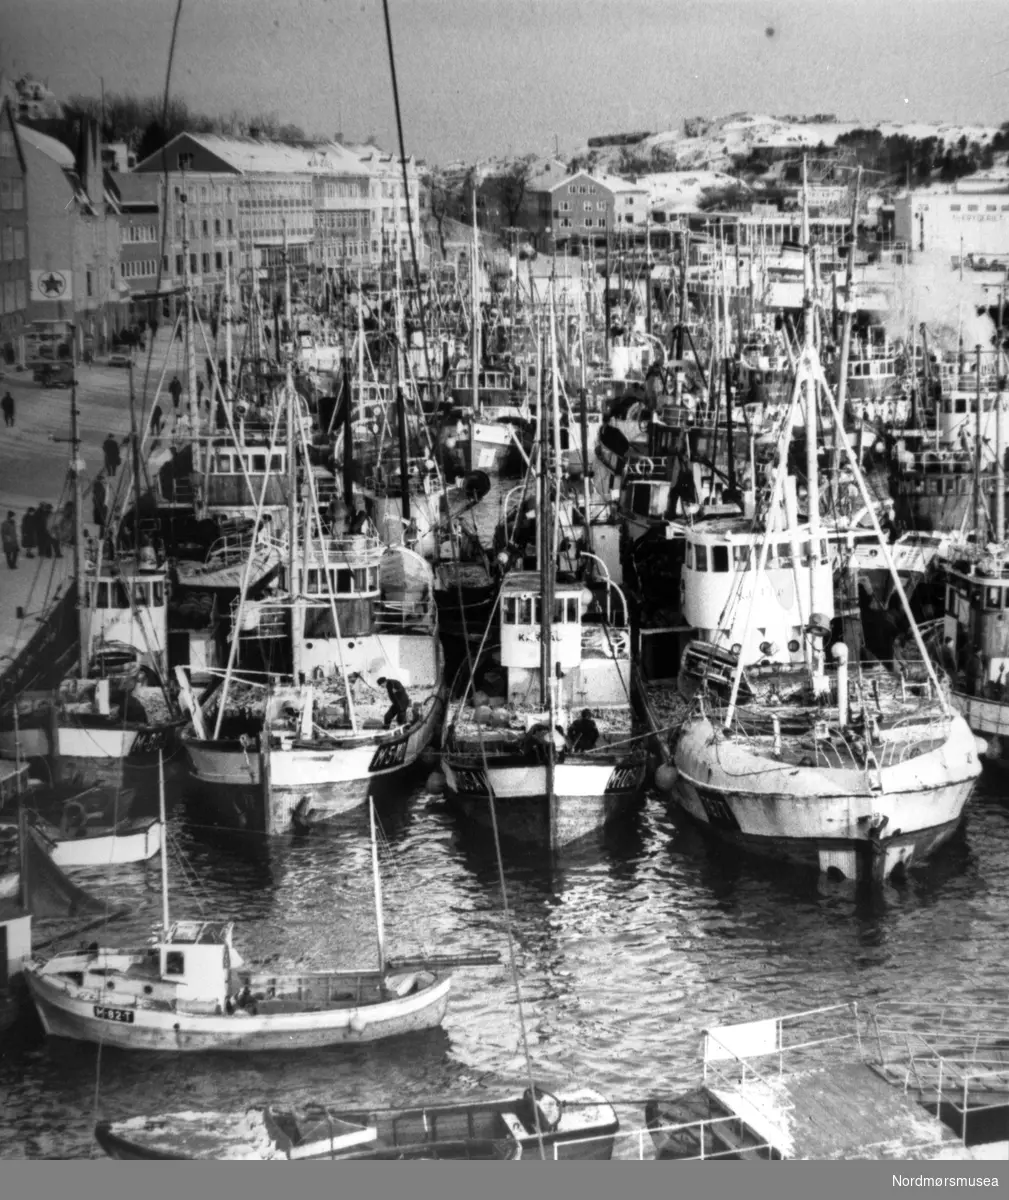 Vinter, snø, sild, fiske, båter, sildeflåten i havn,  Vågekaia, Piren, ca 1950. Fra Nordmøre Museum sin fotosamling.